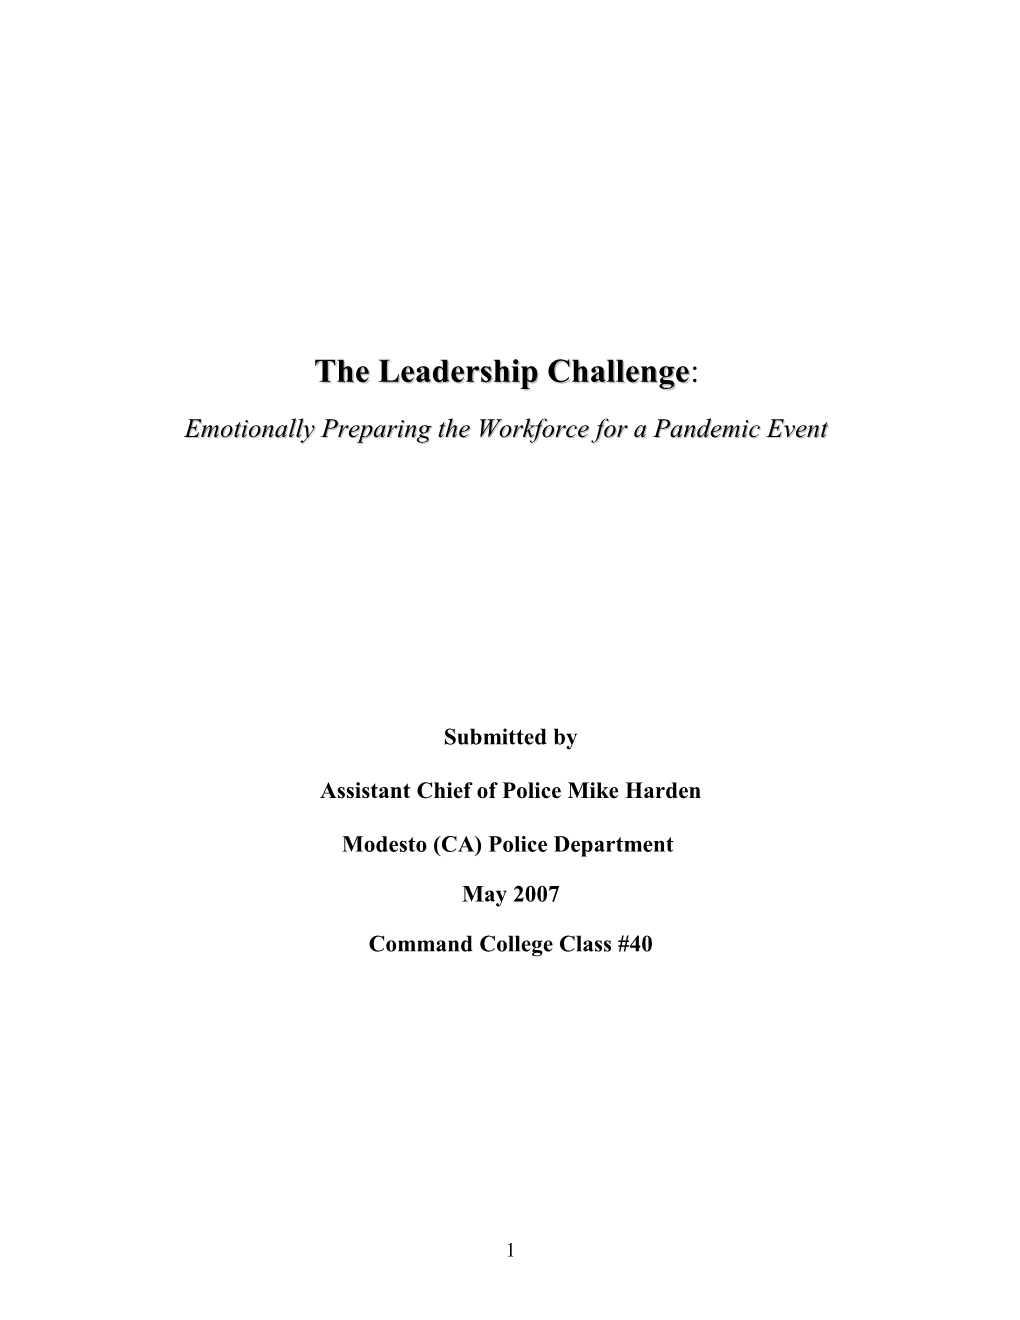 The Law Enforcement Leader Challenge